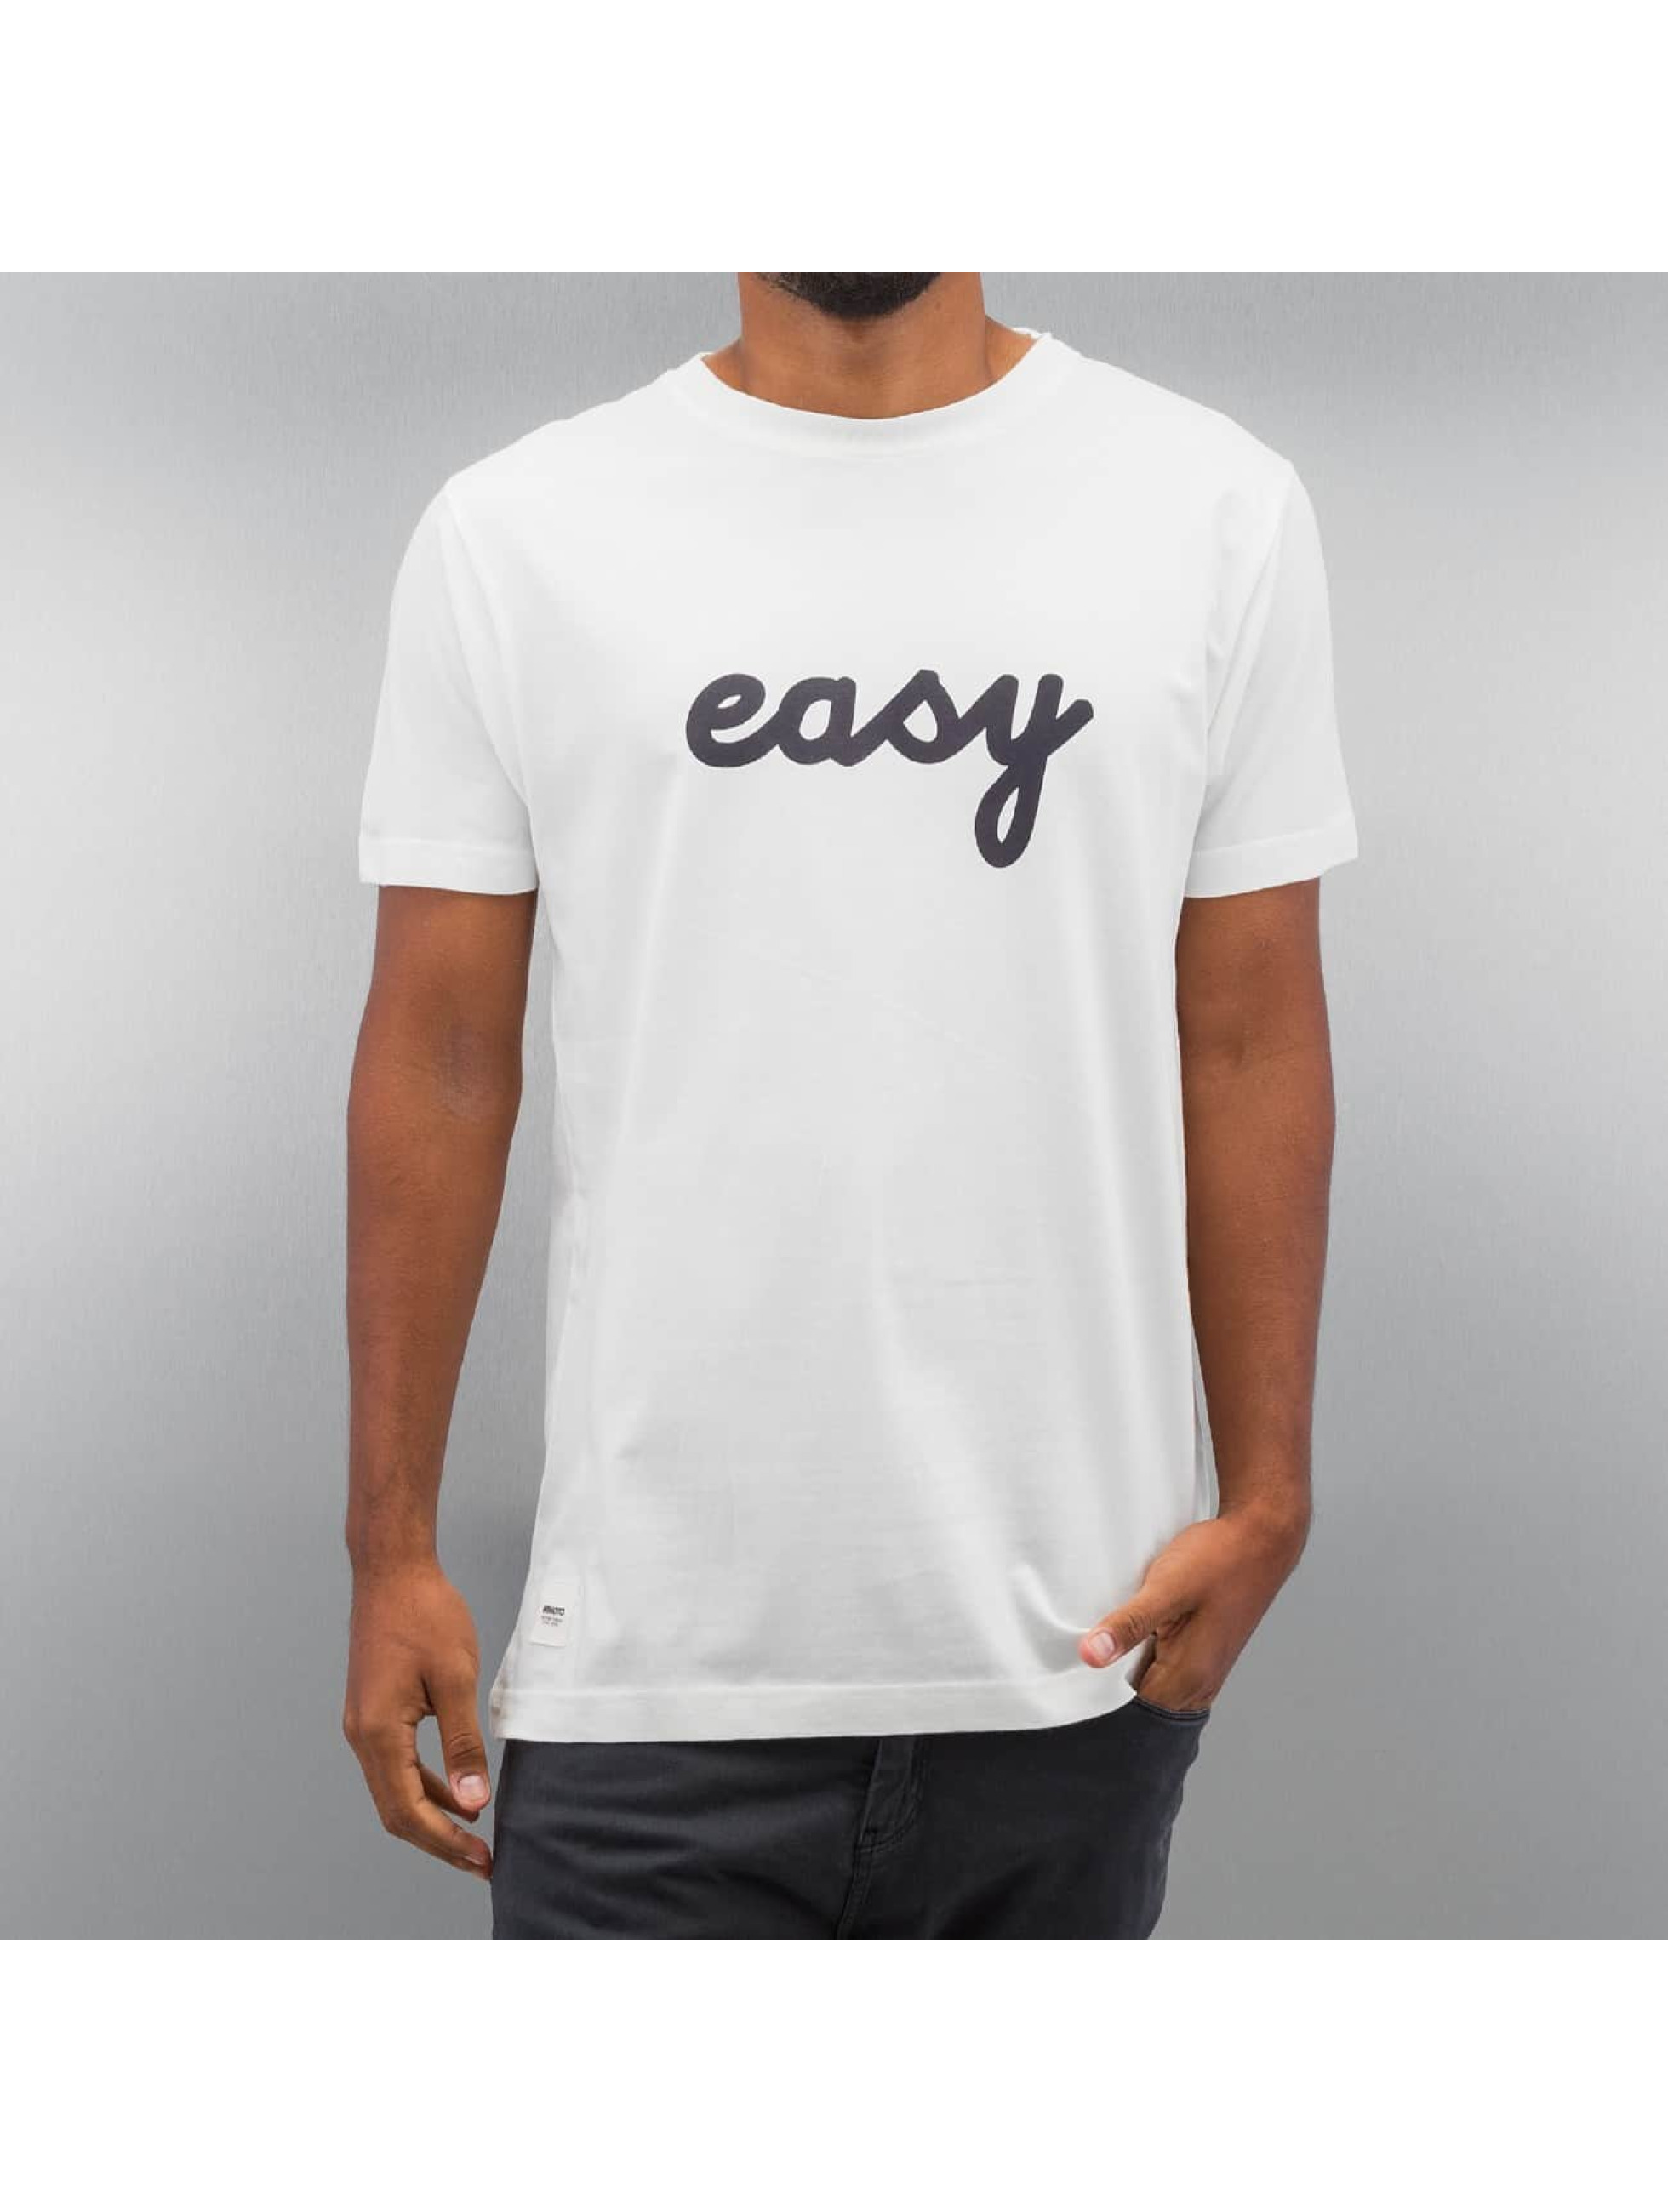 https://www.def-shop.fr/wemoto-easy-t-shirt-off-white-277762.html